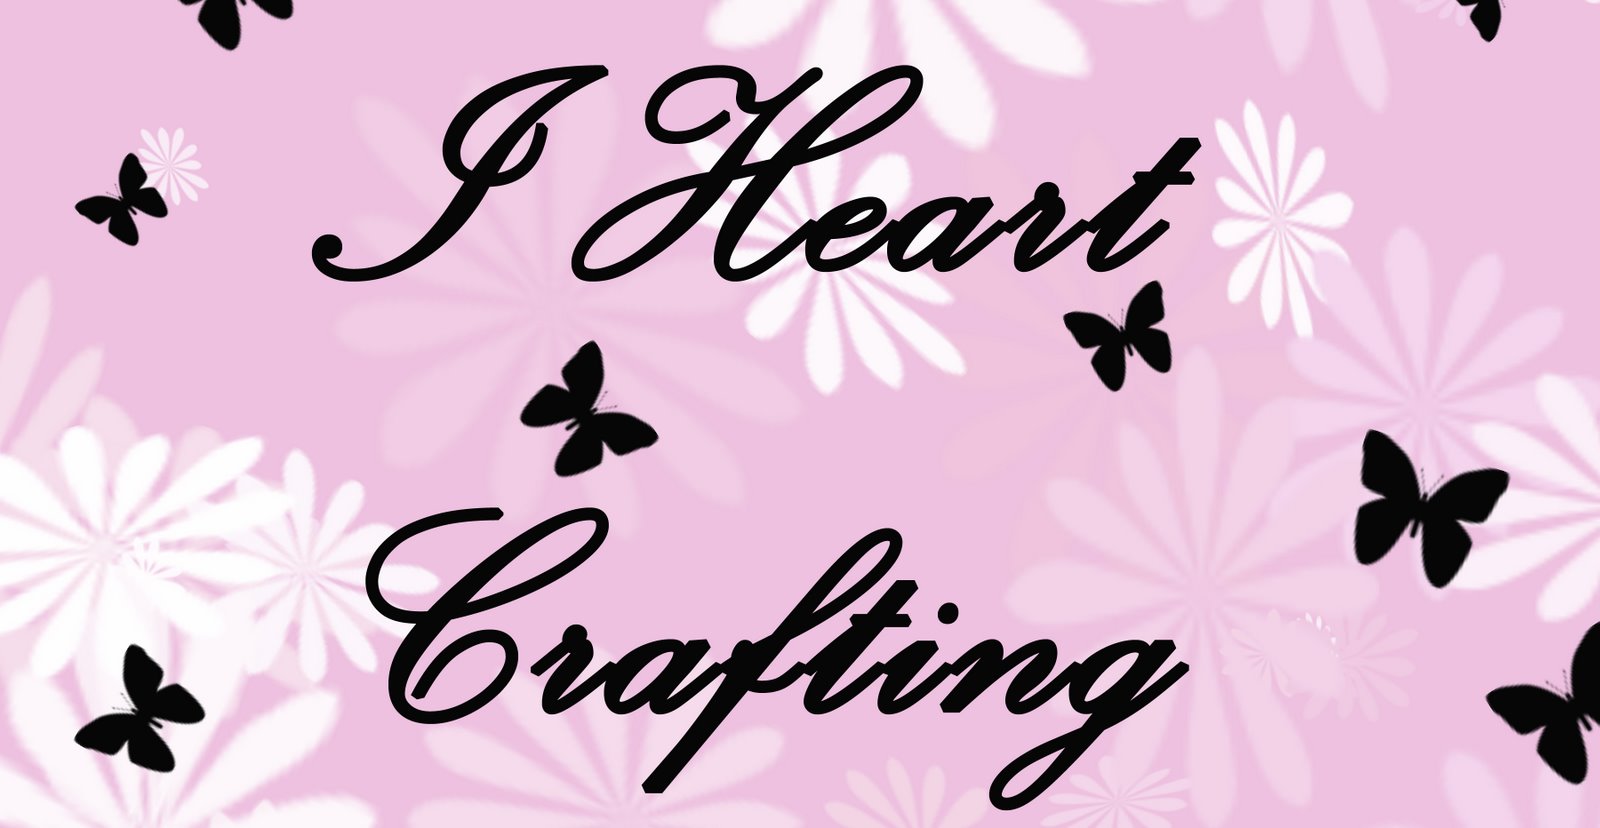 I heart crafting